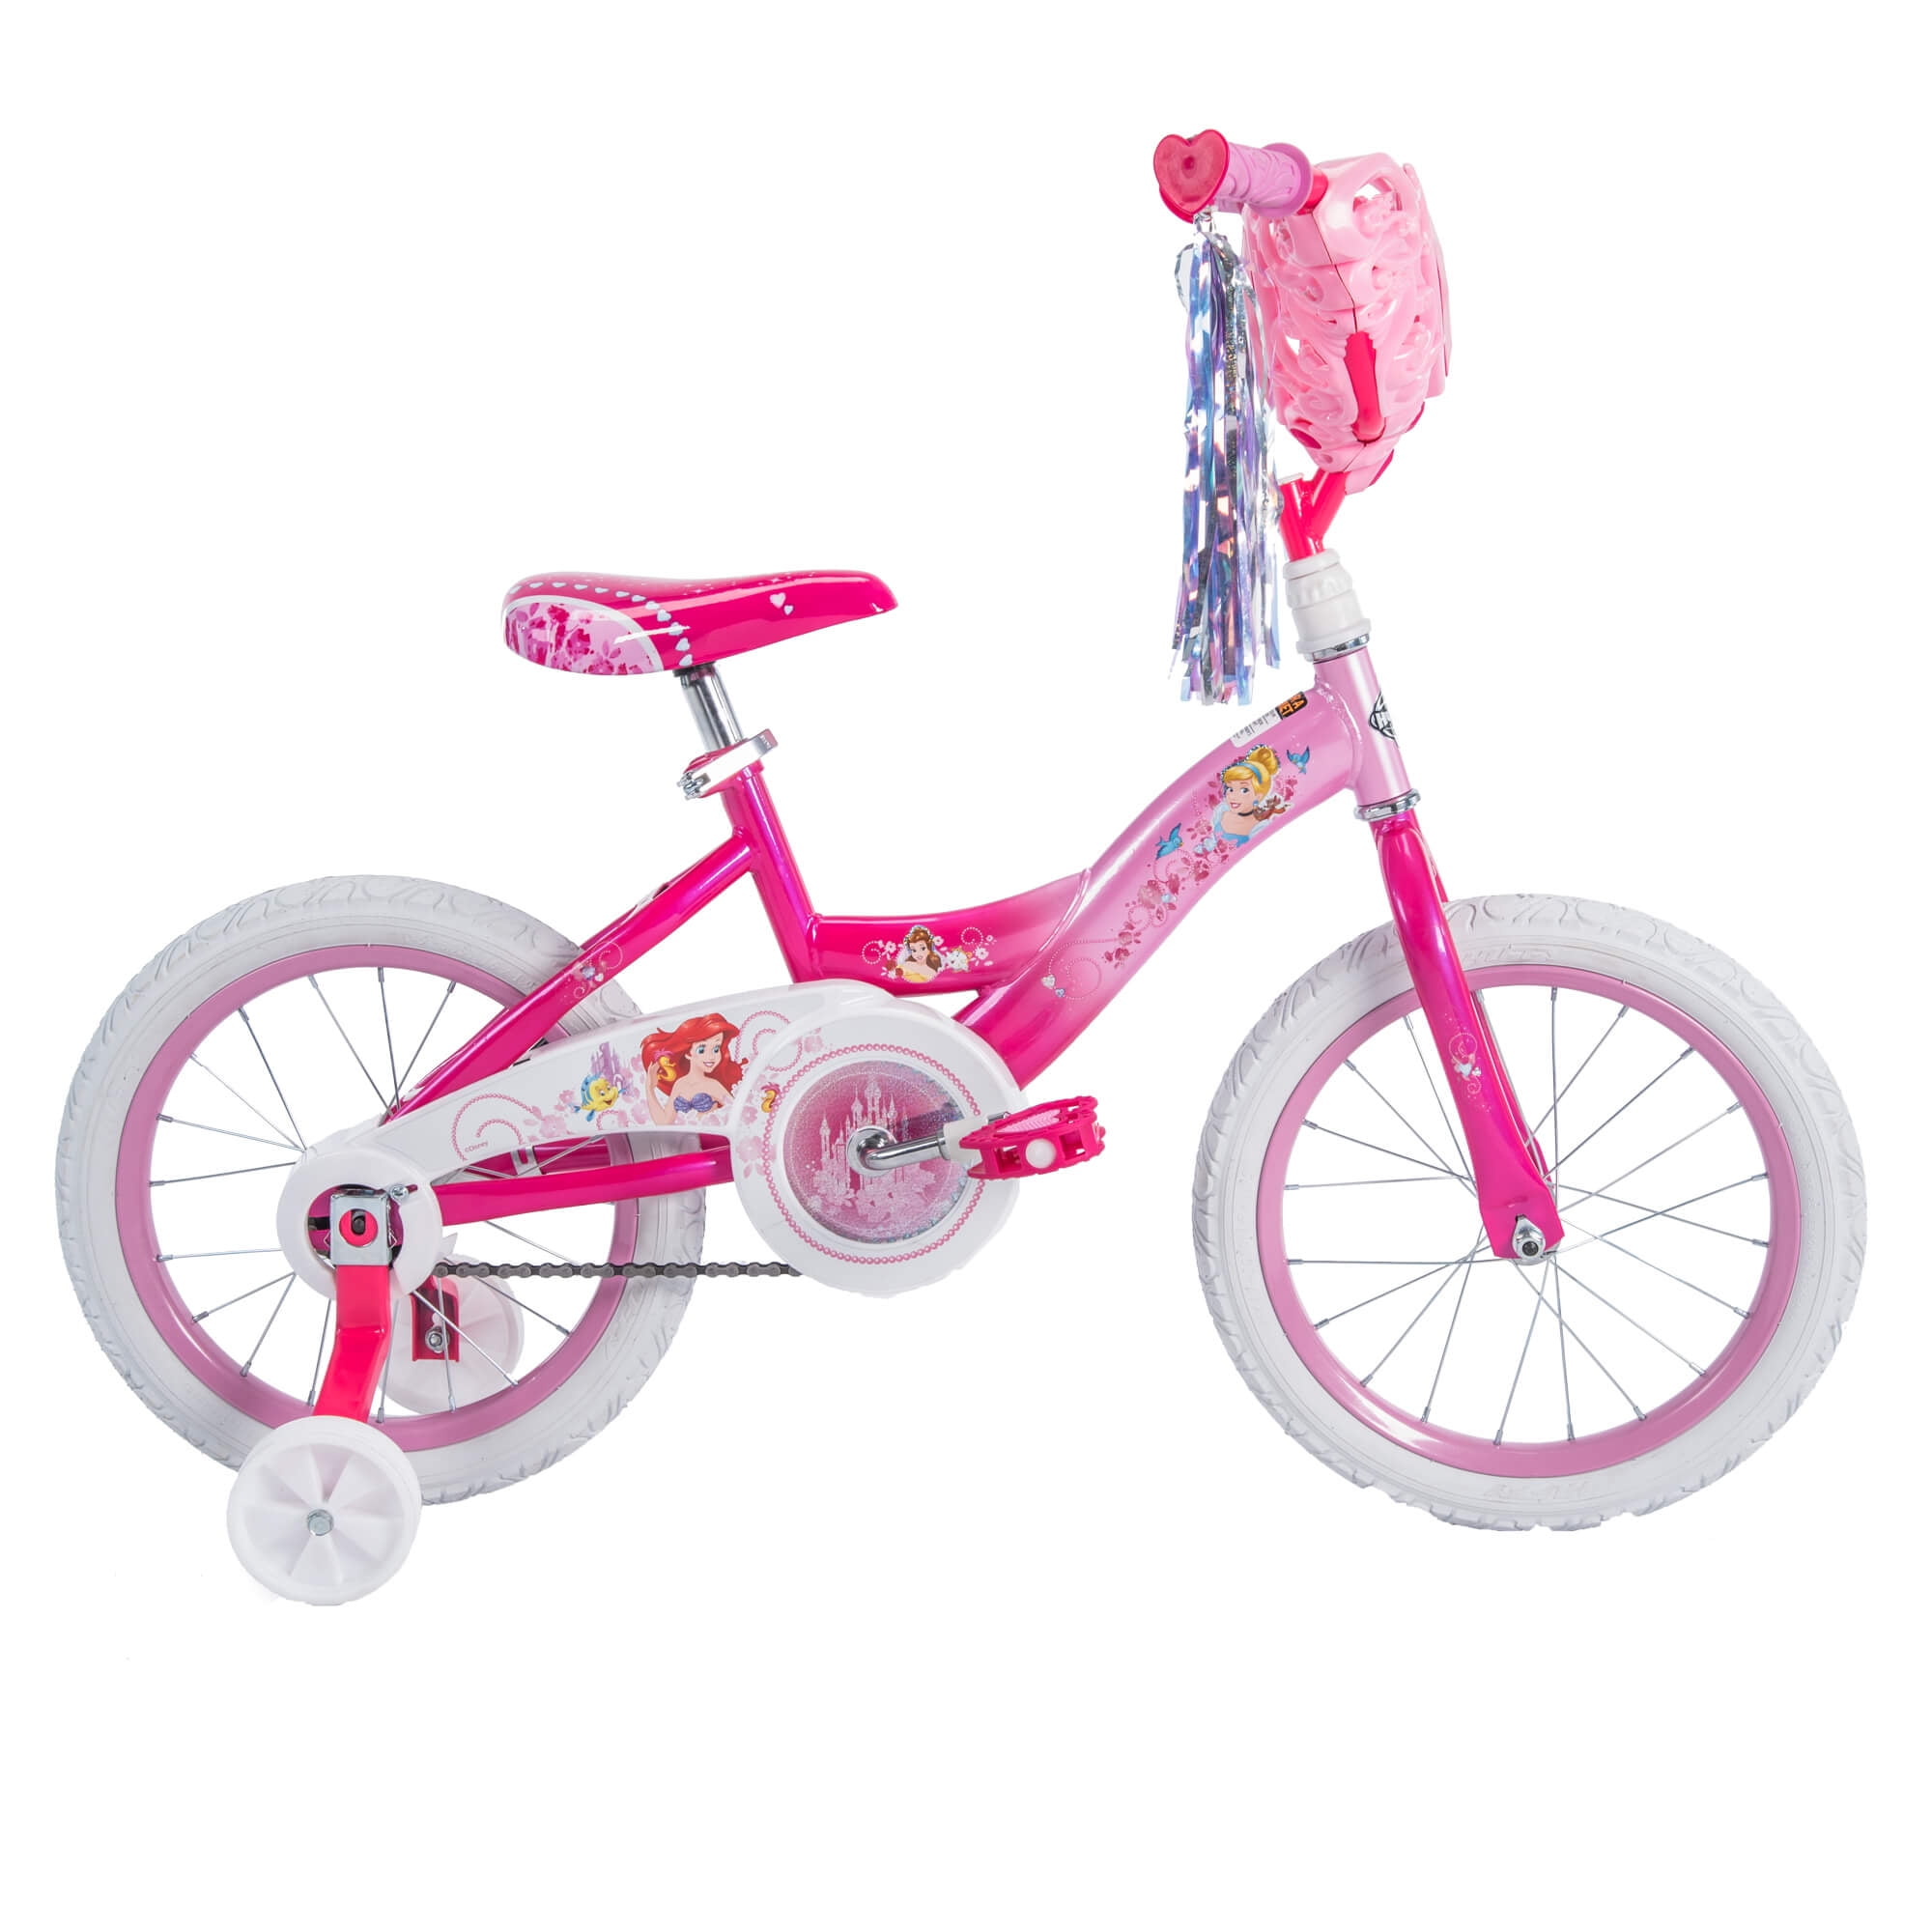 Disney Princess 16" Girls' EZ Build Pink Bike, by Huffy